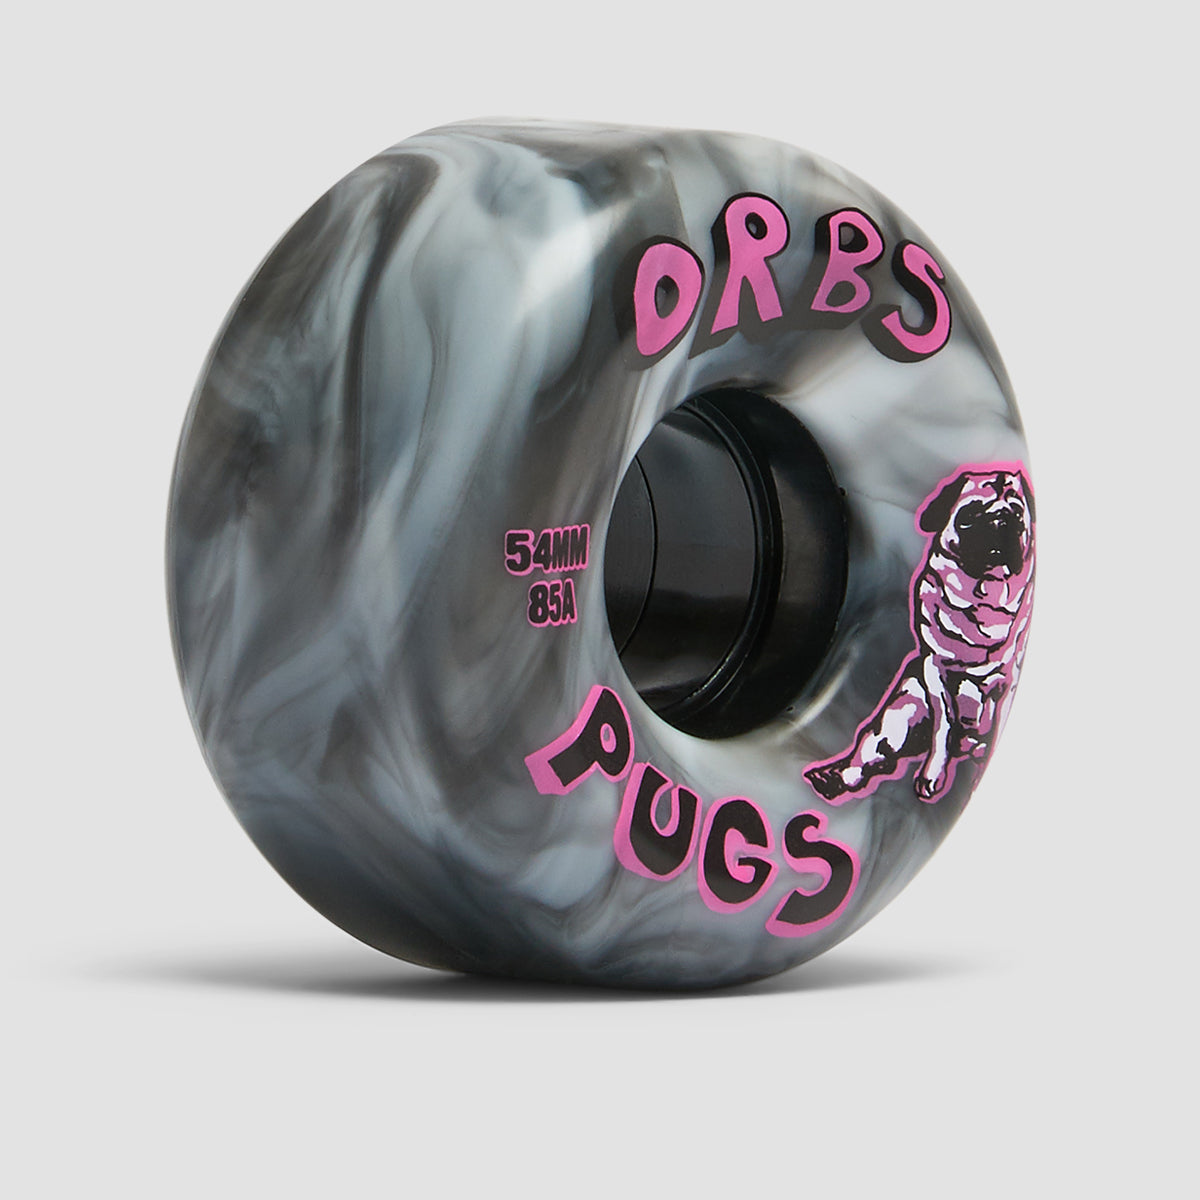 Welcome Orbs Pugs Swirls Conical 85A Wheels Black/White 54mm